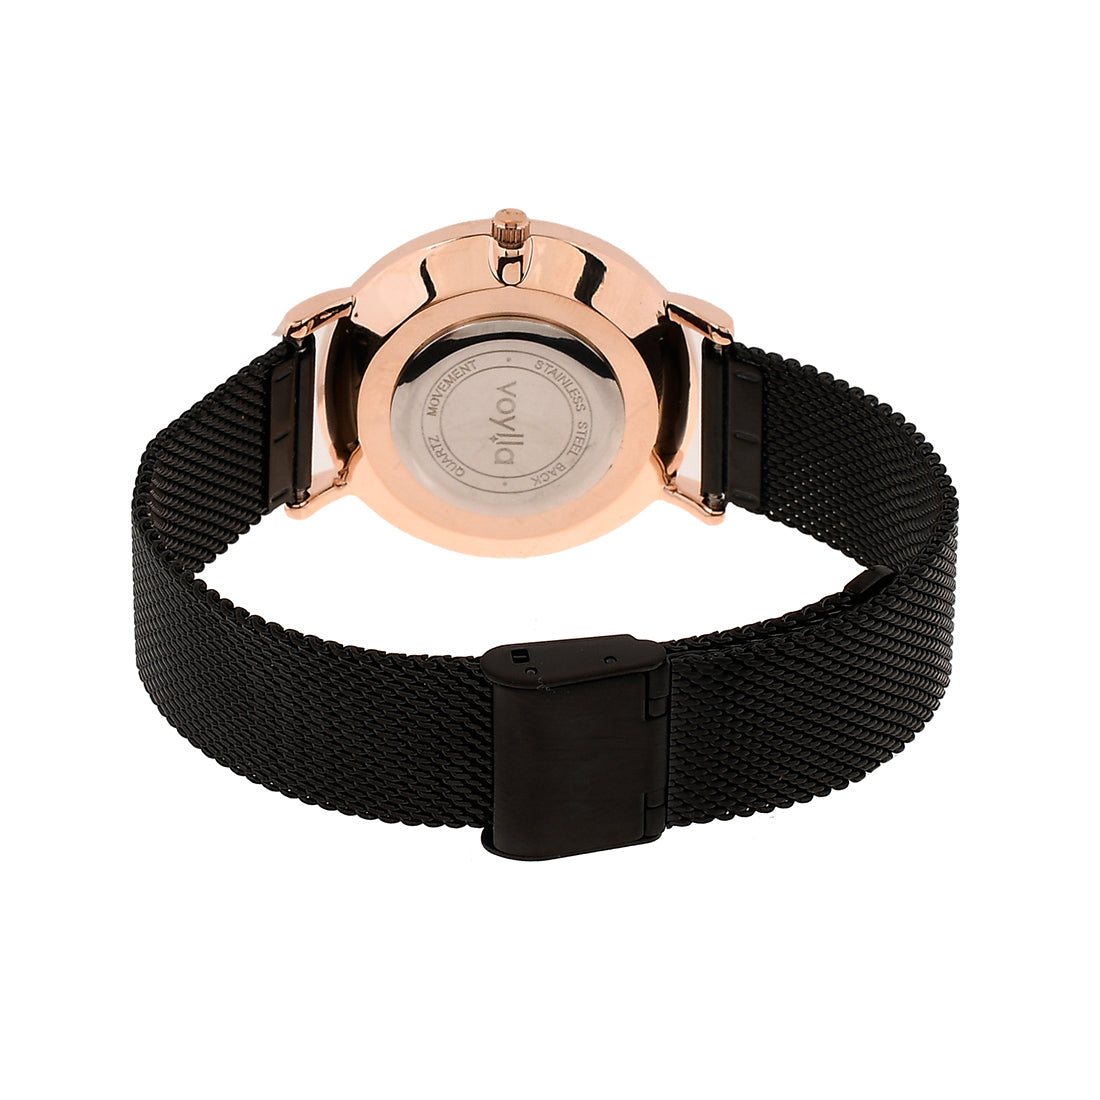 Voylla Studded Black Dial Watch - Voylla